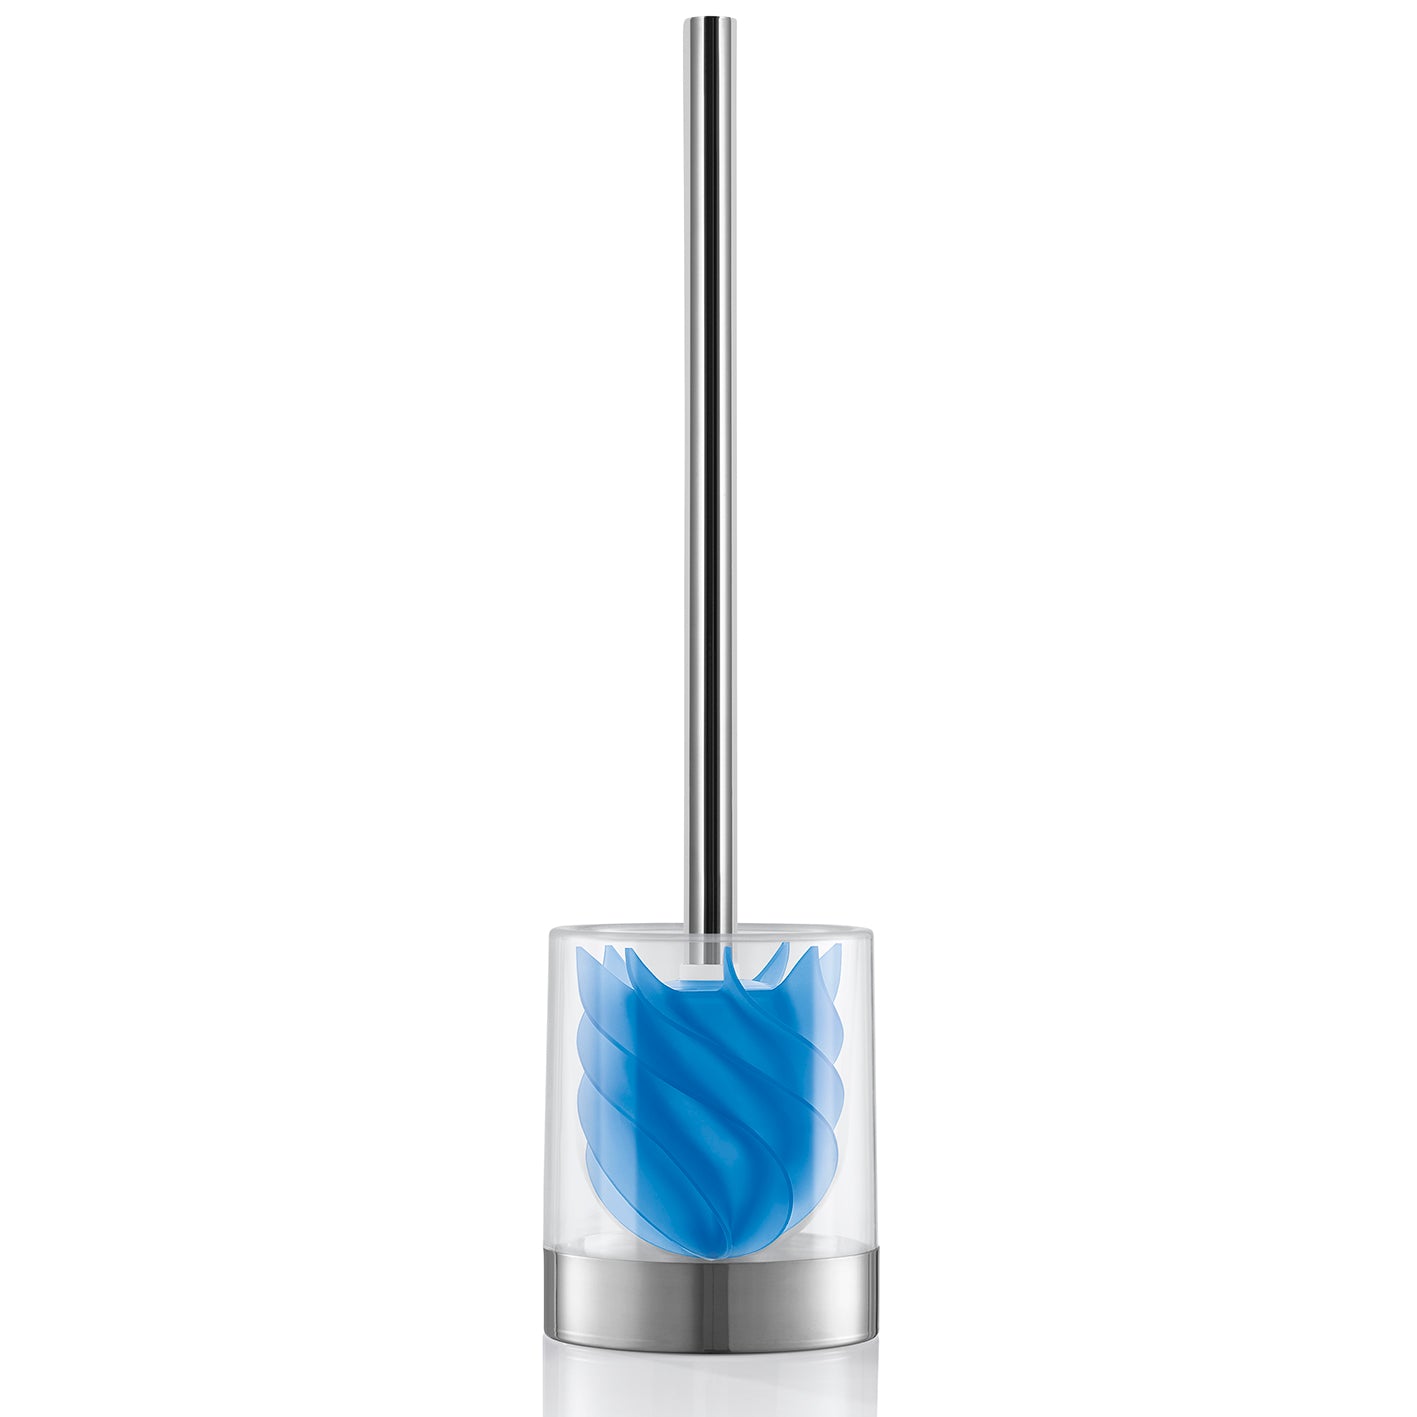 WC-Bürste Silikonkopf Edelstahl/blau mit Ständer (Bürstenhalter) transparent/Edelstahl - 2er-Set